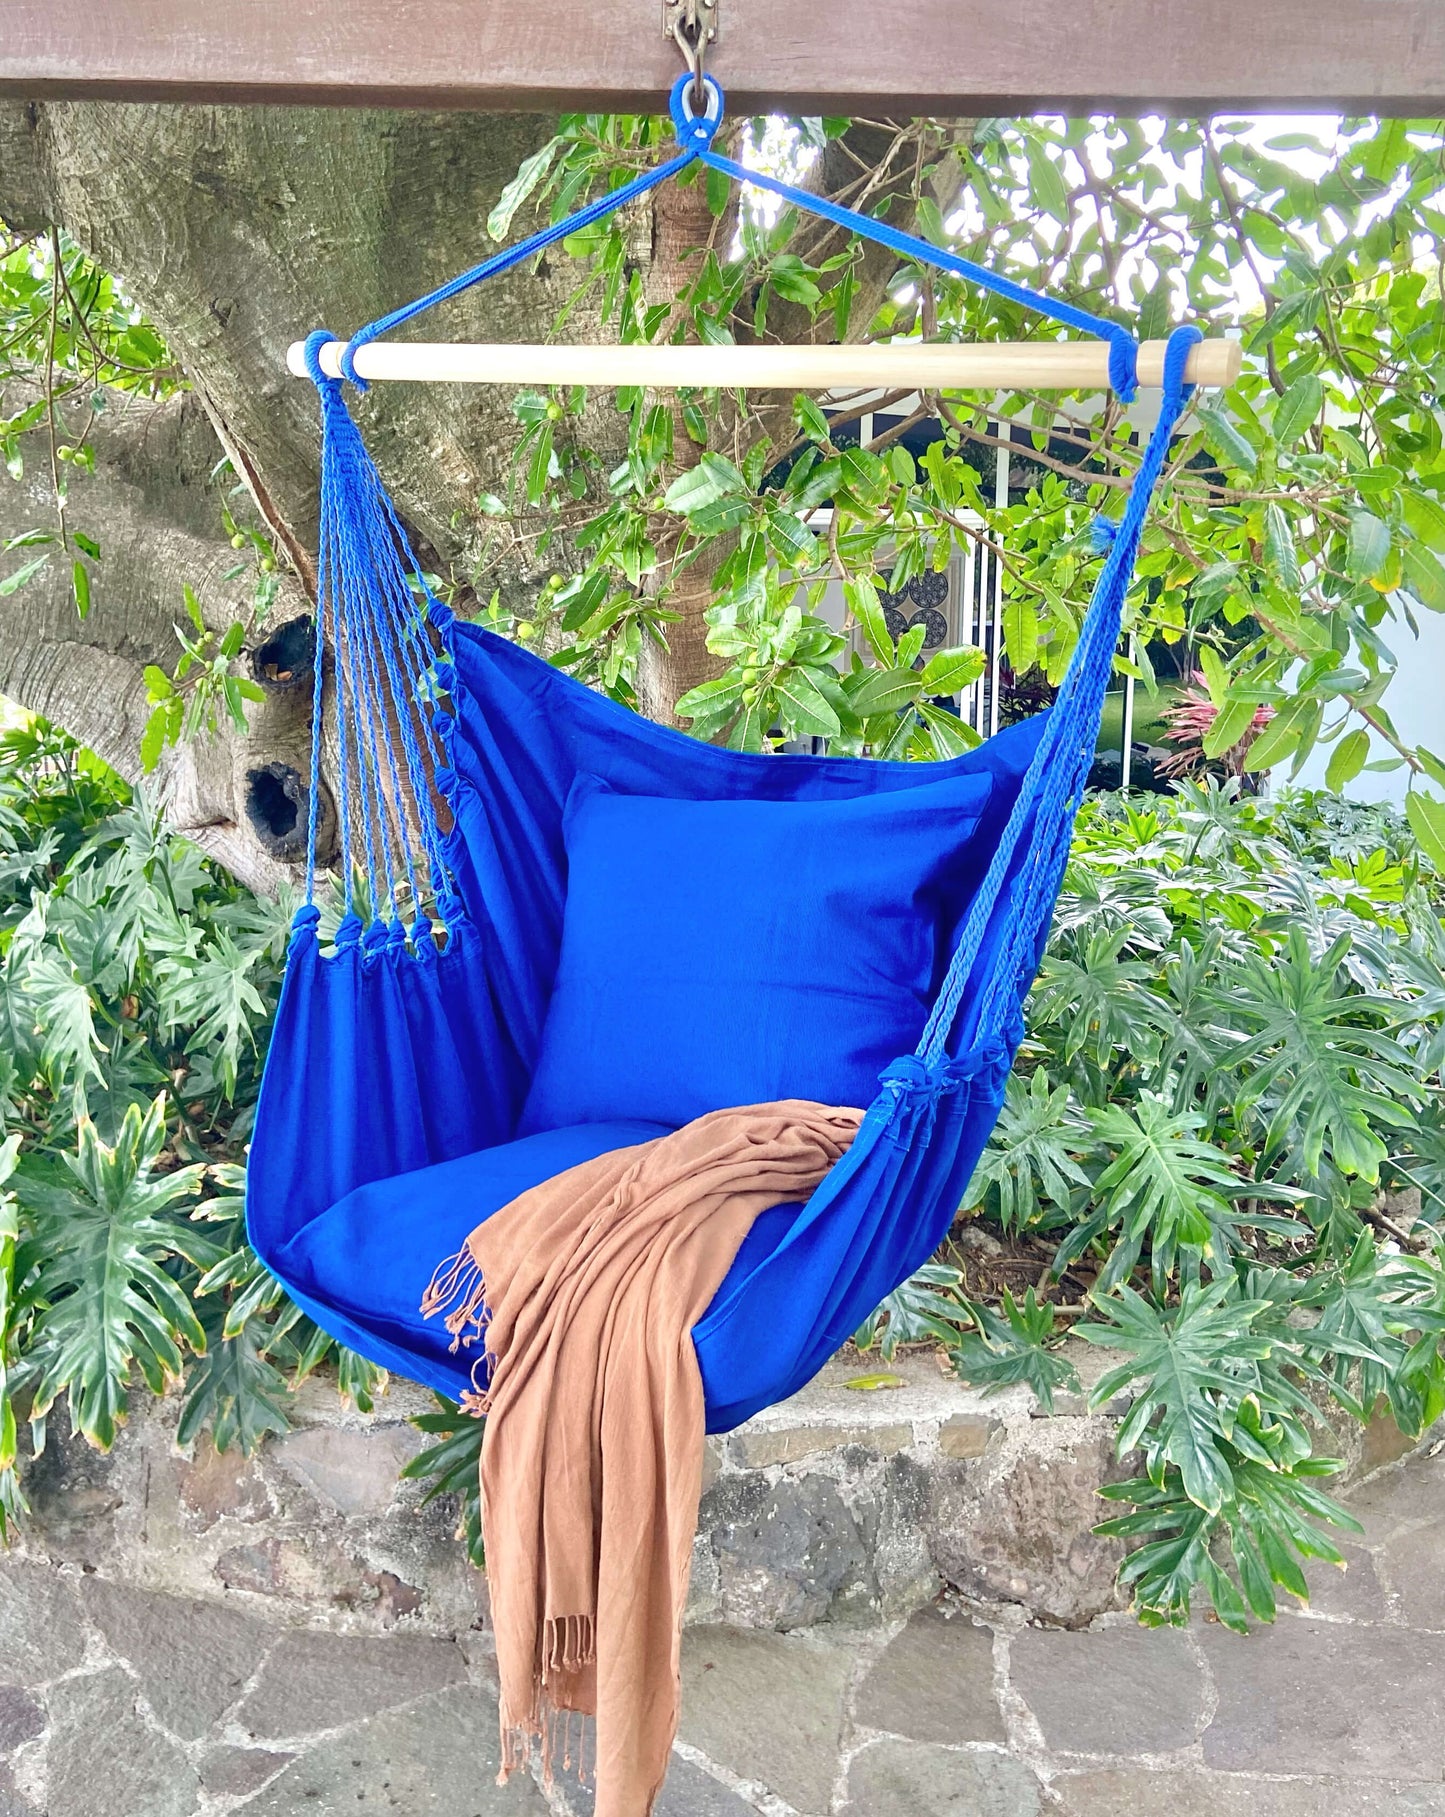 blue hammock chair with swing in a garden